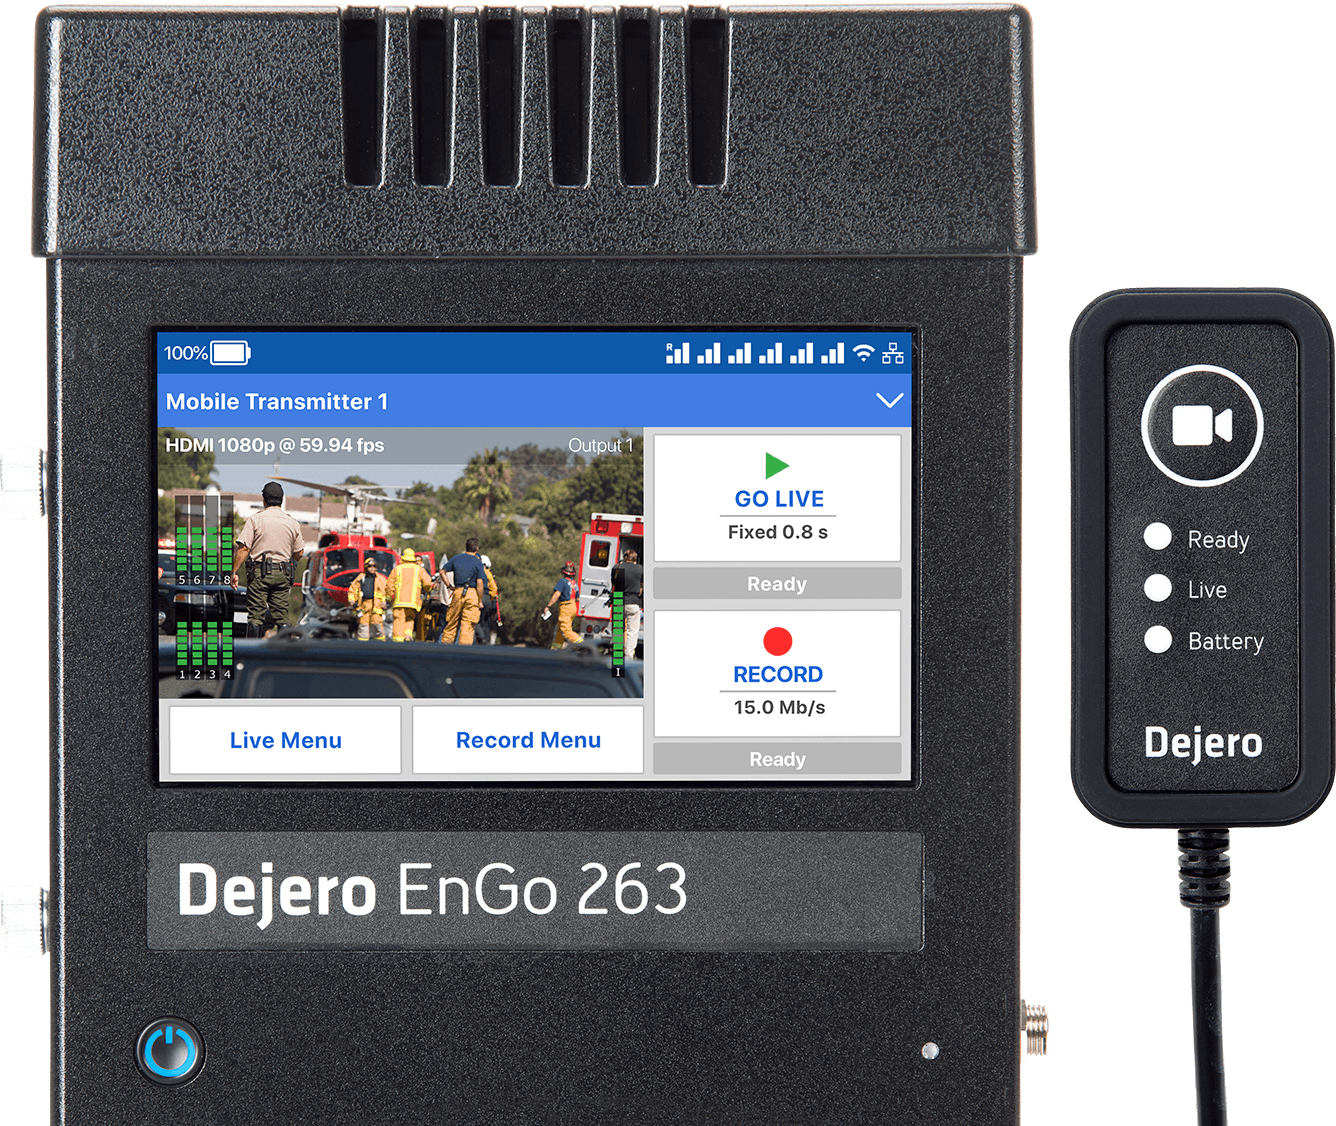 Dejero EnGo 263 Simple and intuitive